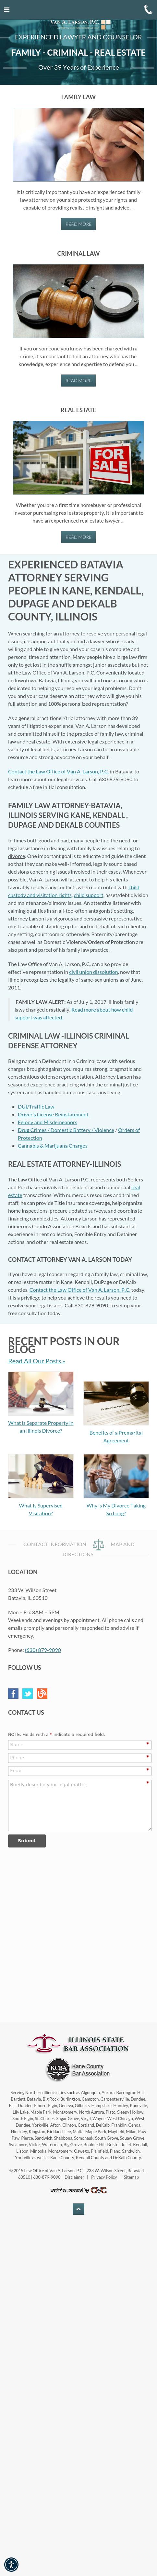 Van A. Larson, PC - Batavia IL Lawyers